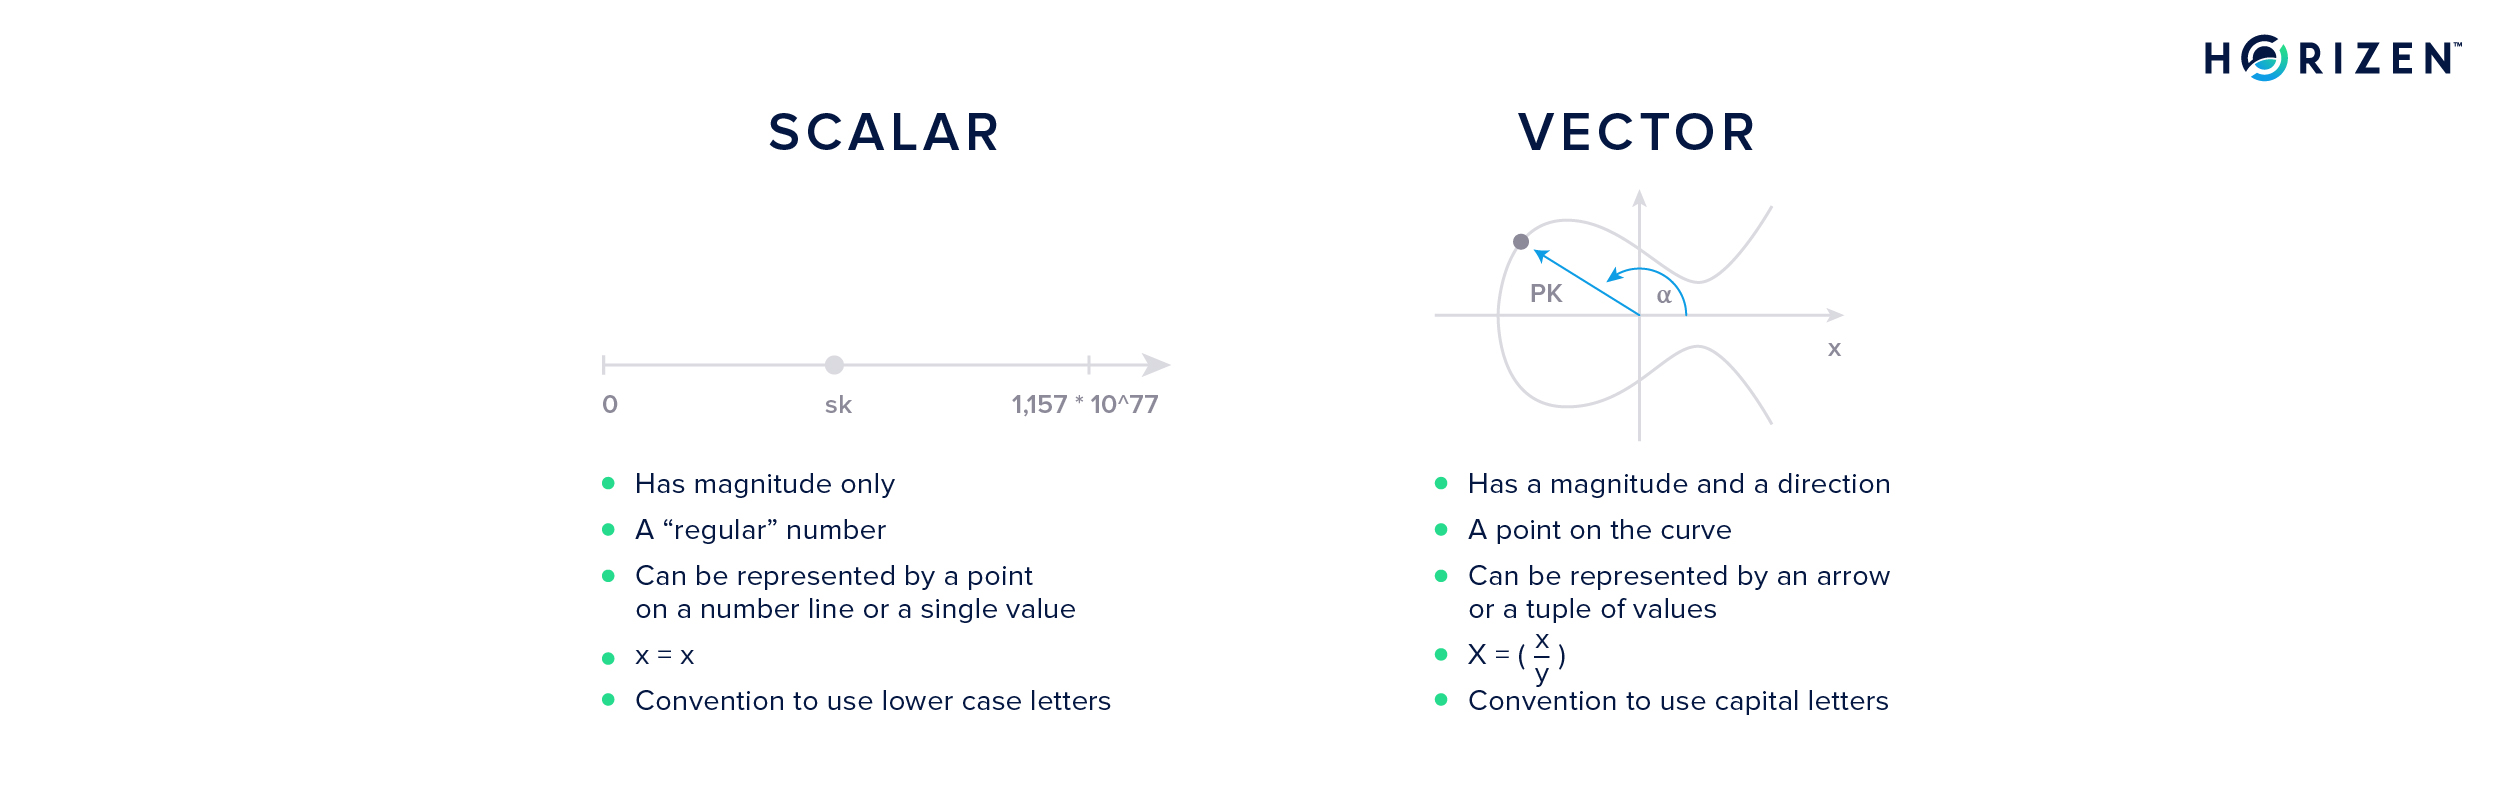 Scalar vs. Vector